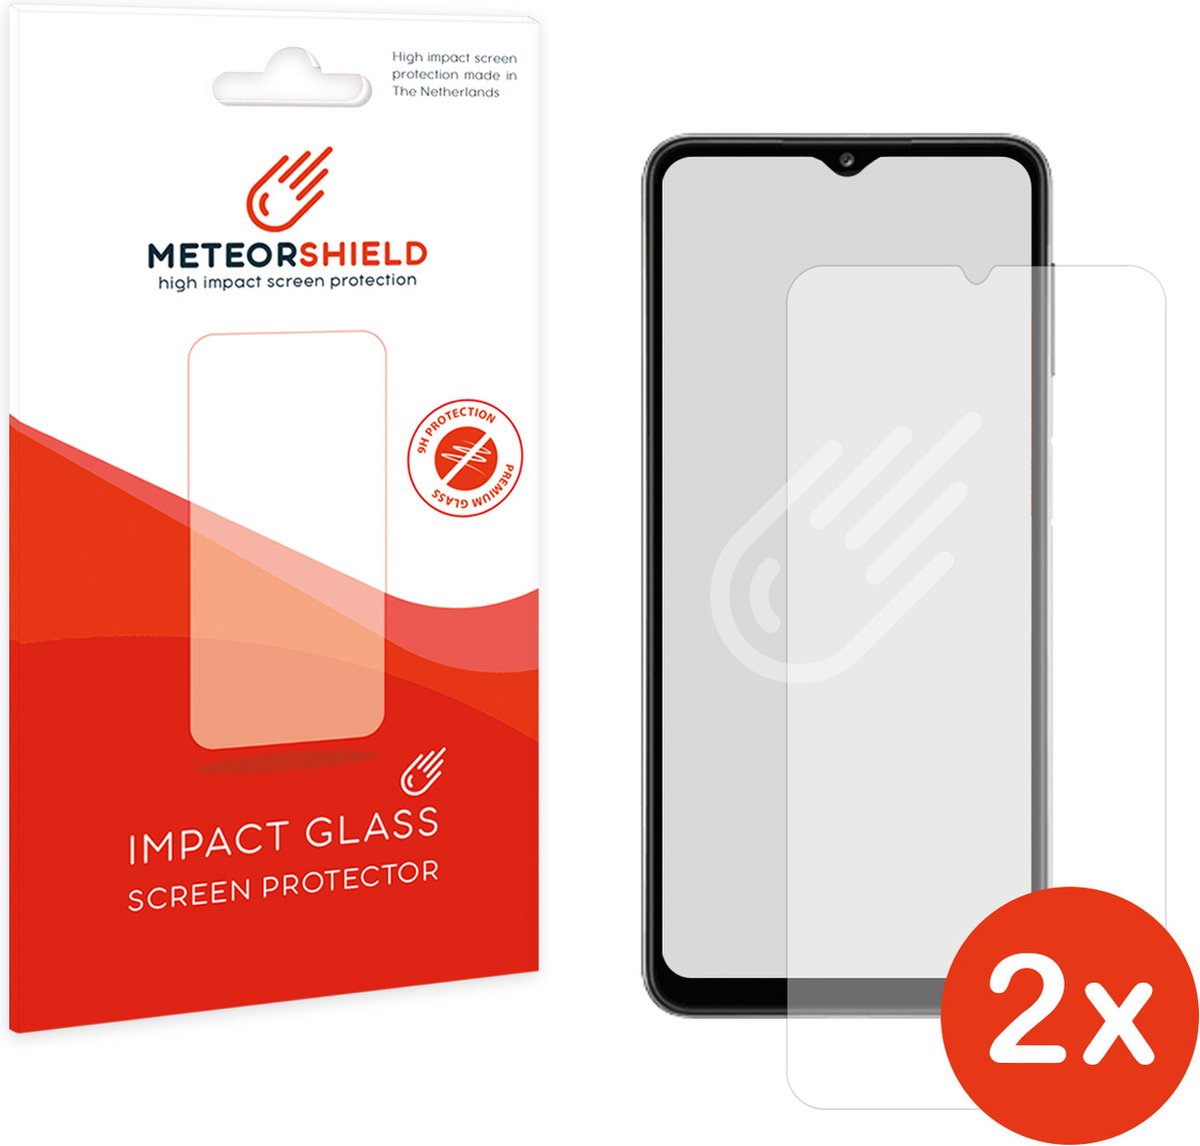 2 stuks: Meteorshield Samsung Galaxy A12 screenprotector - Ultra clear impact glass